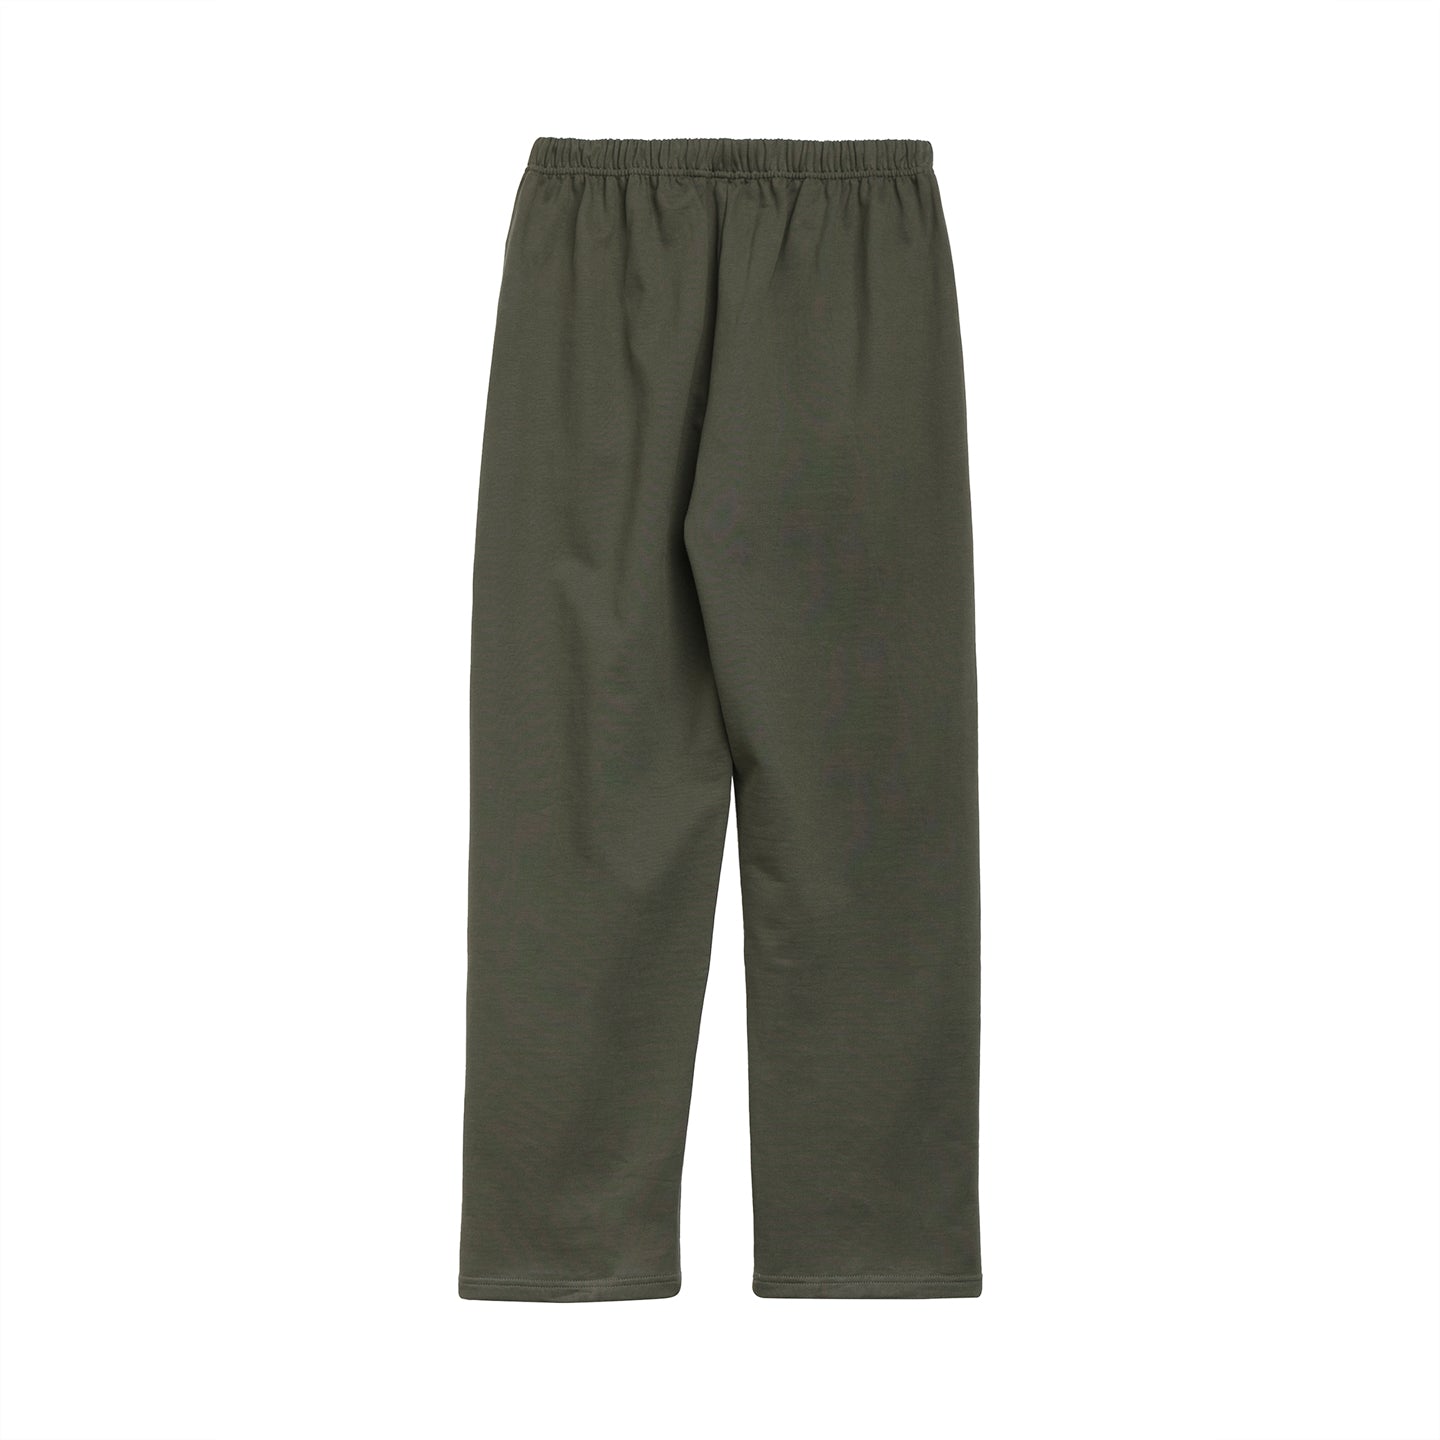 EST Bud Sweat Pants / Army Green